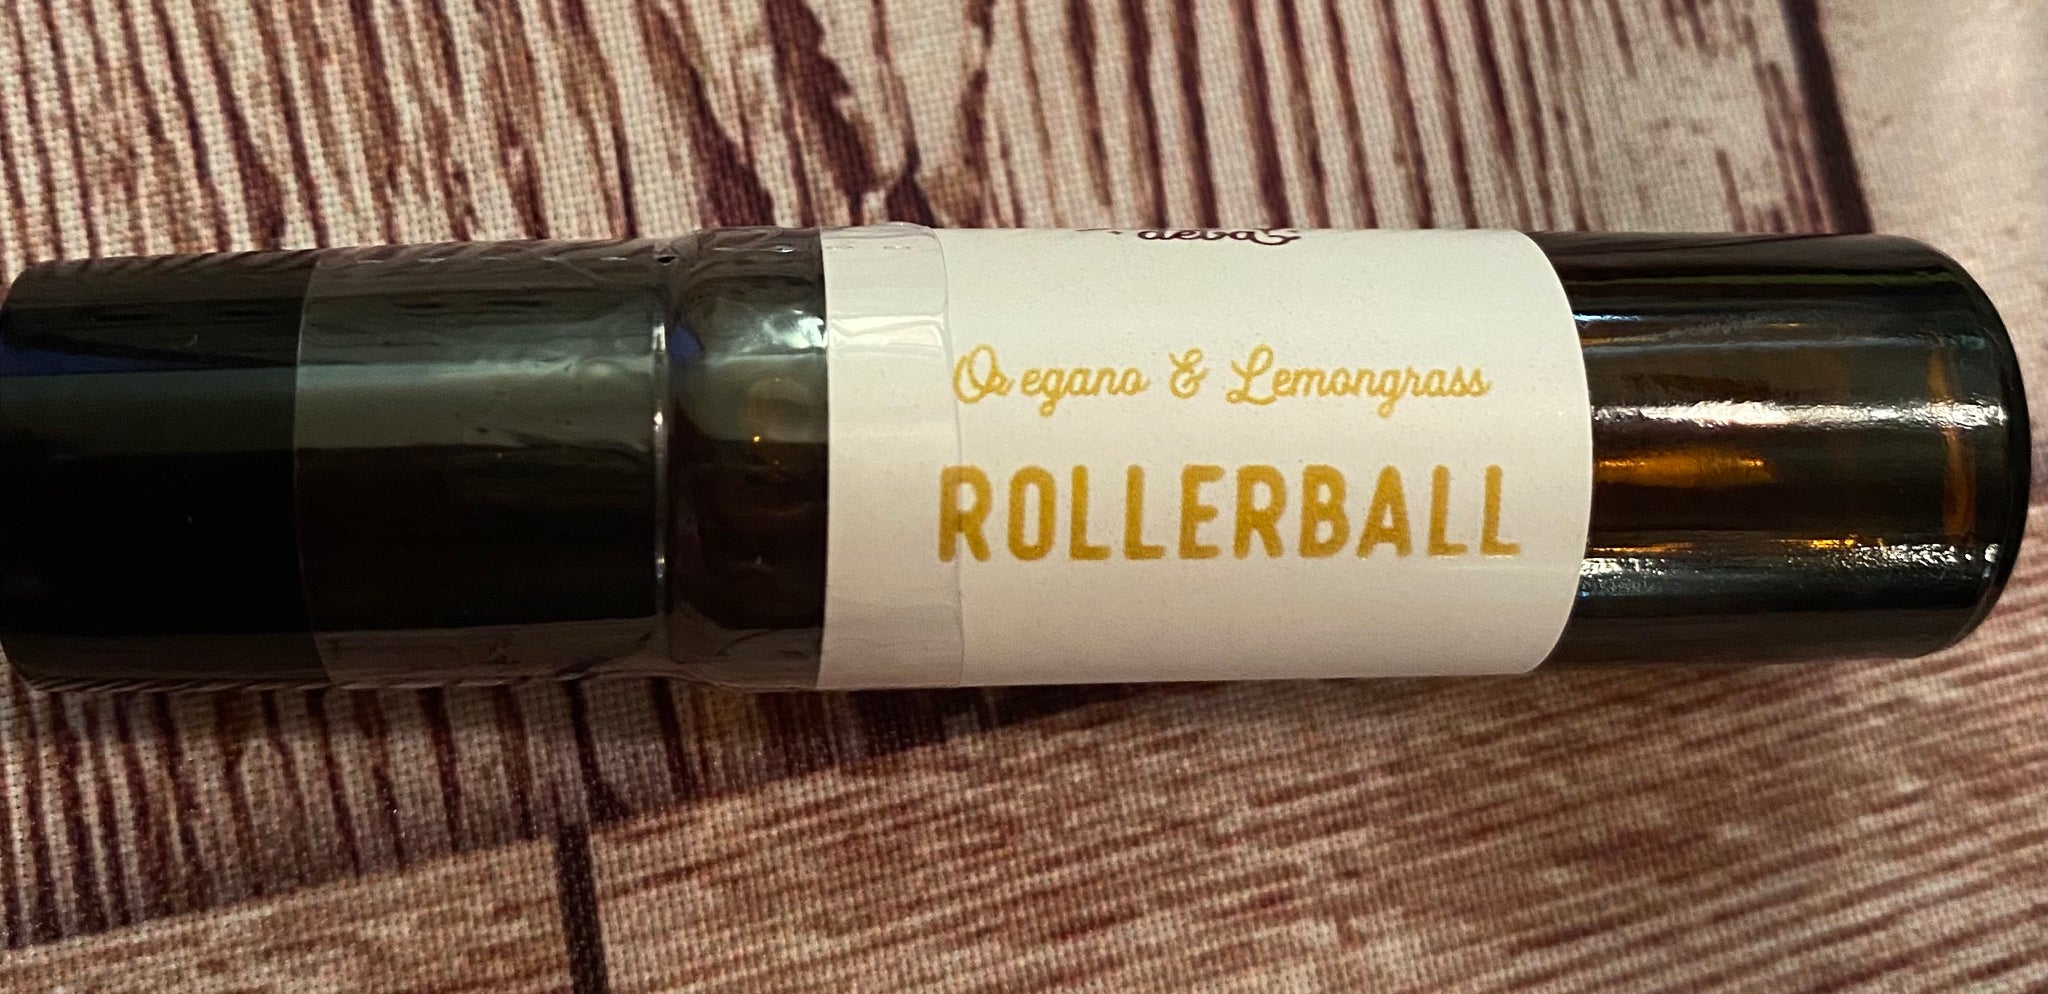 Oregano and Lemongrass Rollerball